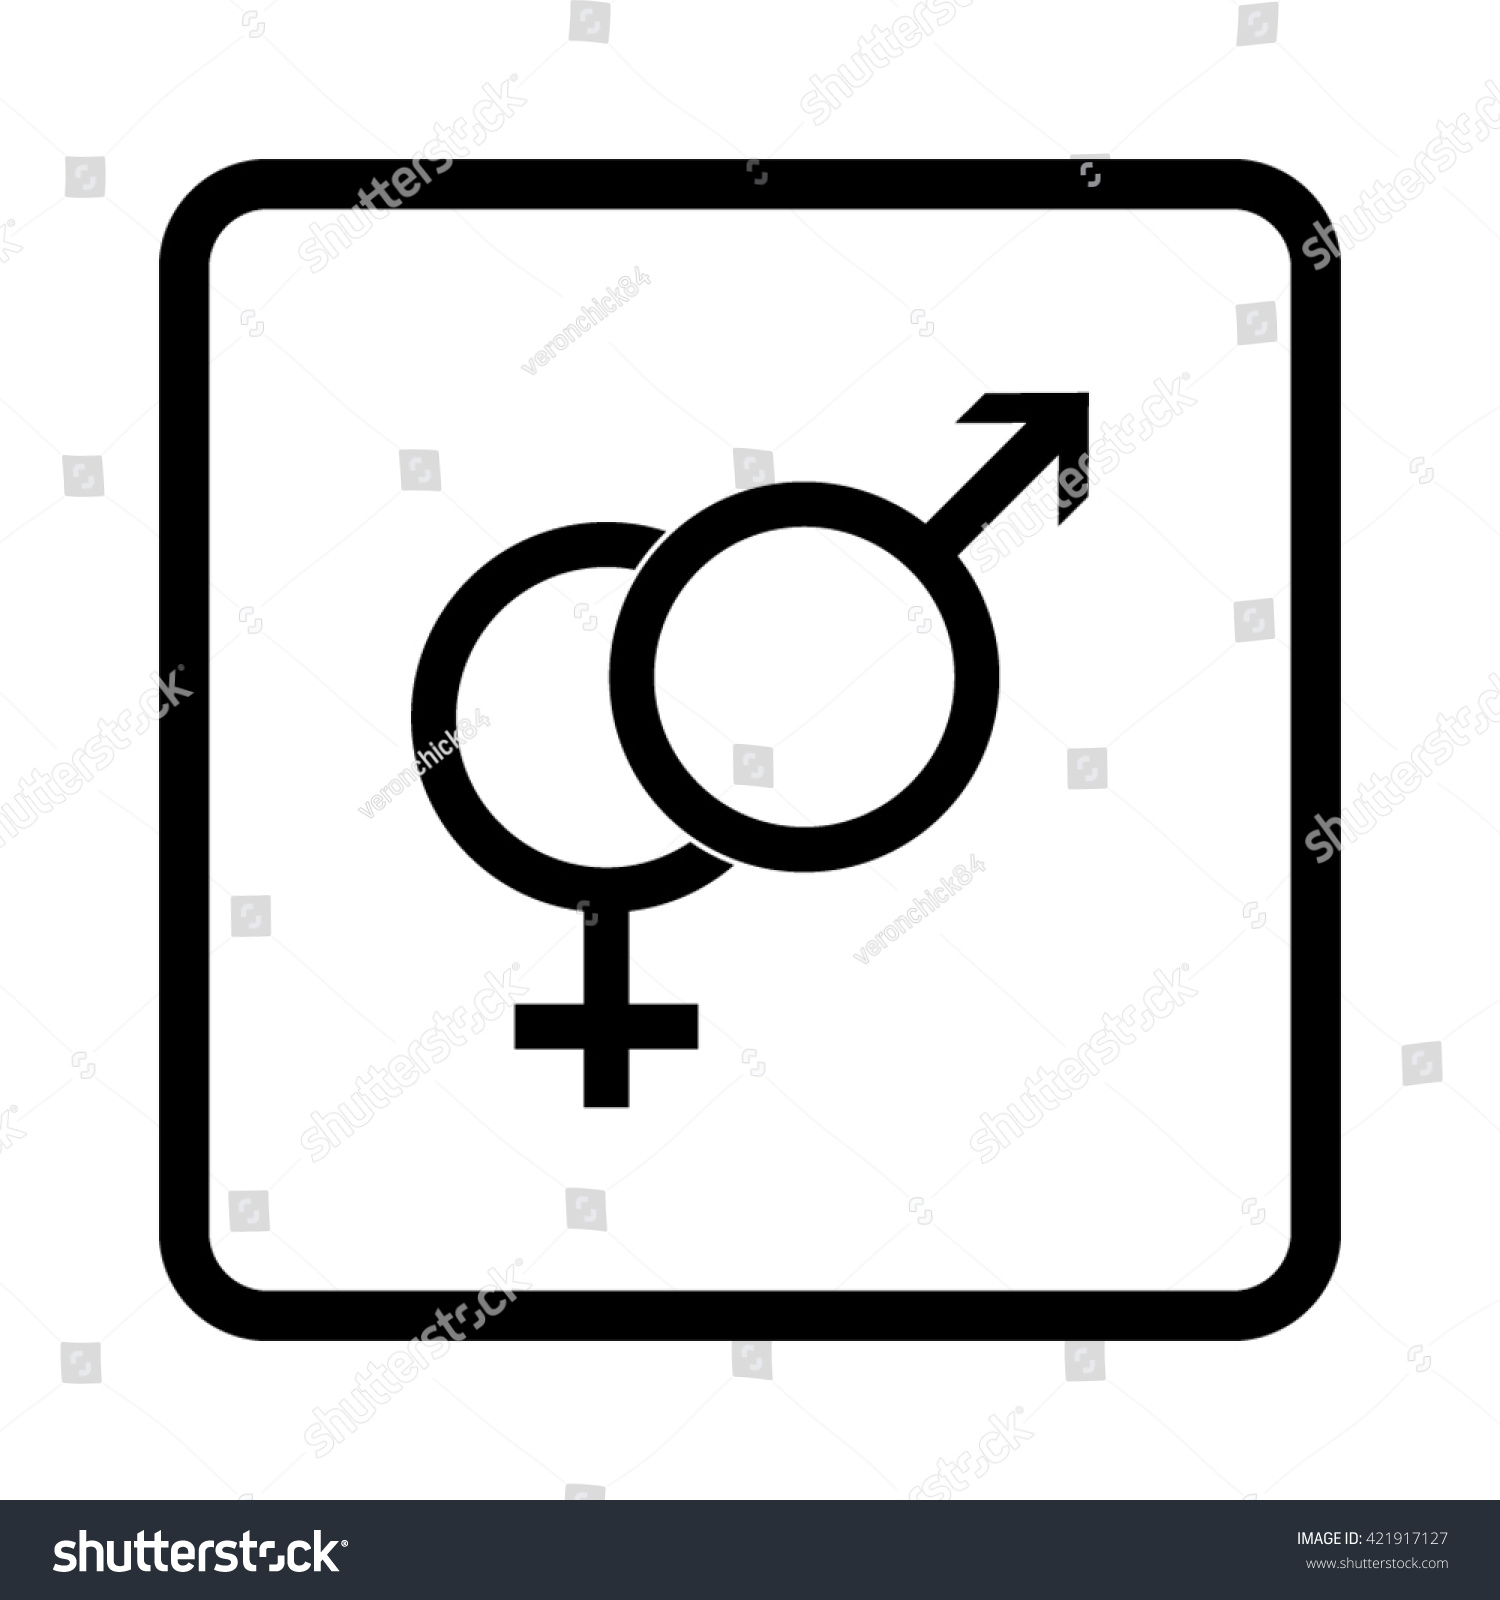 Male Female Symbols Black Vector Icon Stock Vector Royalty Free Shutterstock